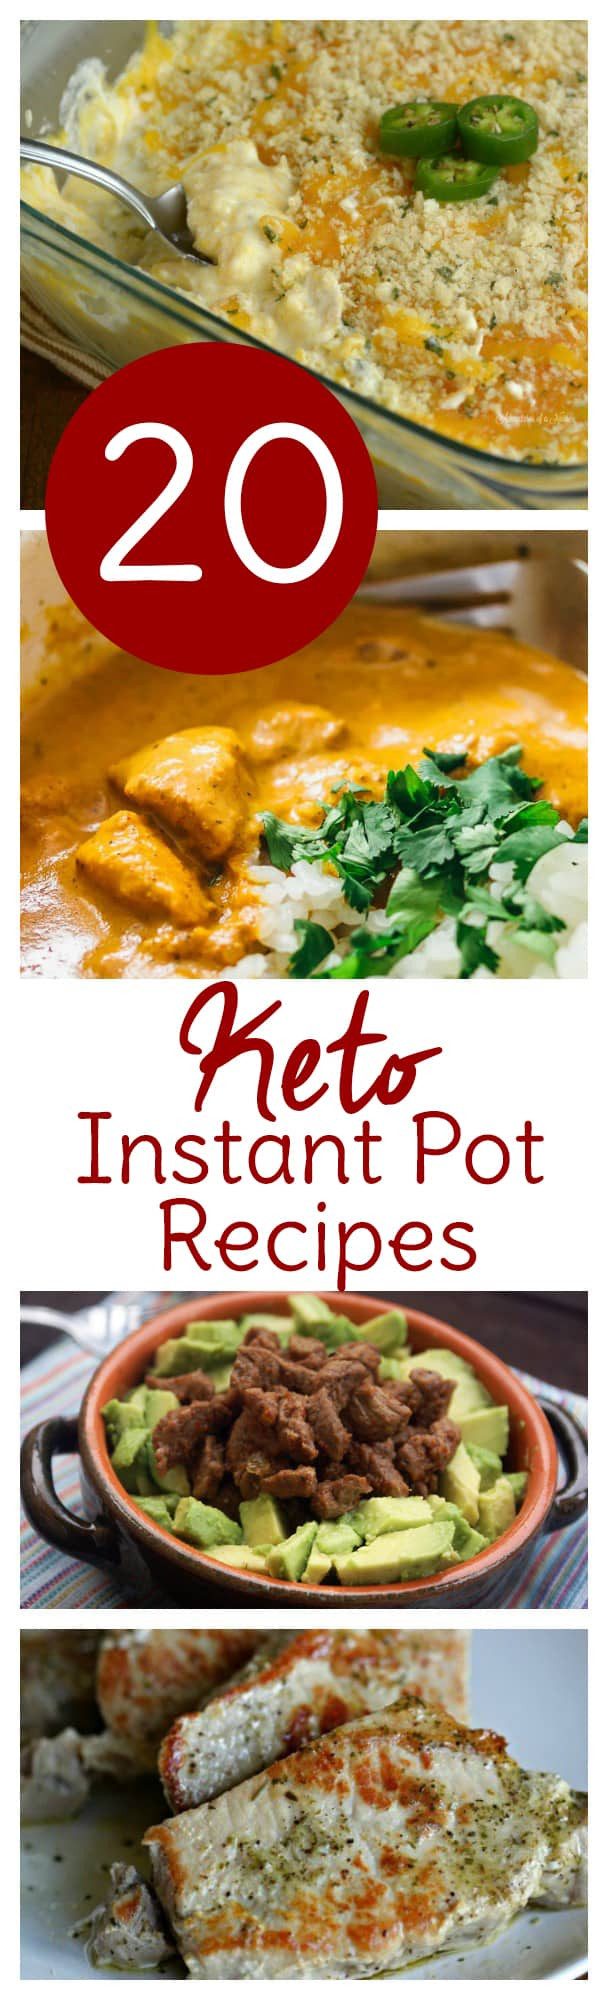 Low Fat Instant Pot Recipes
 20 Instant Pot Keto Recipes to Make This Week